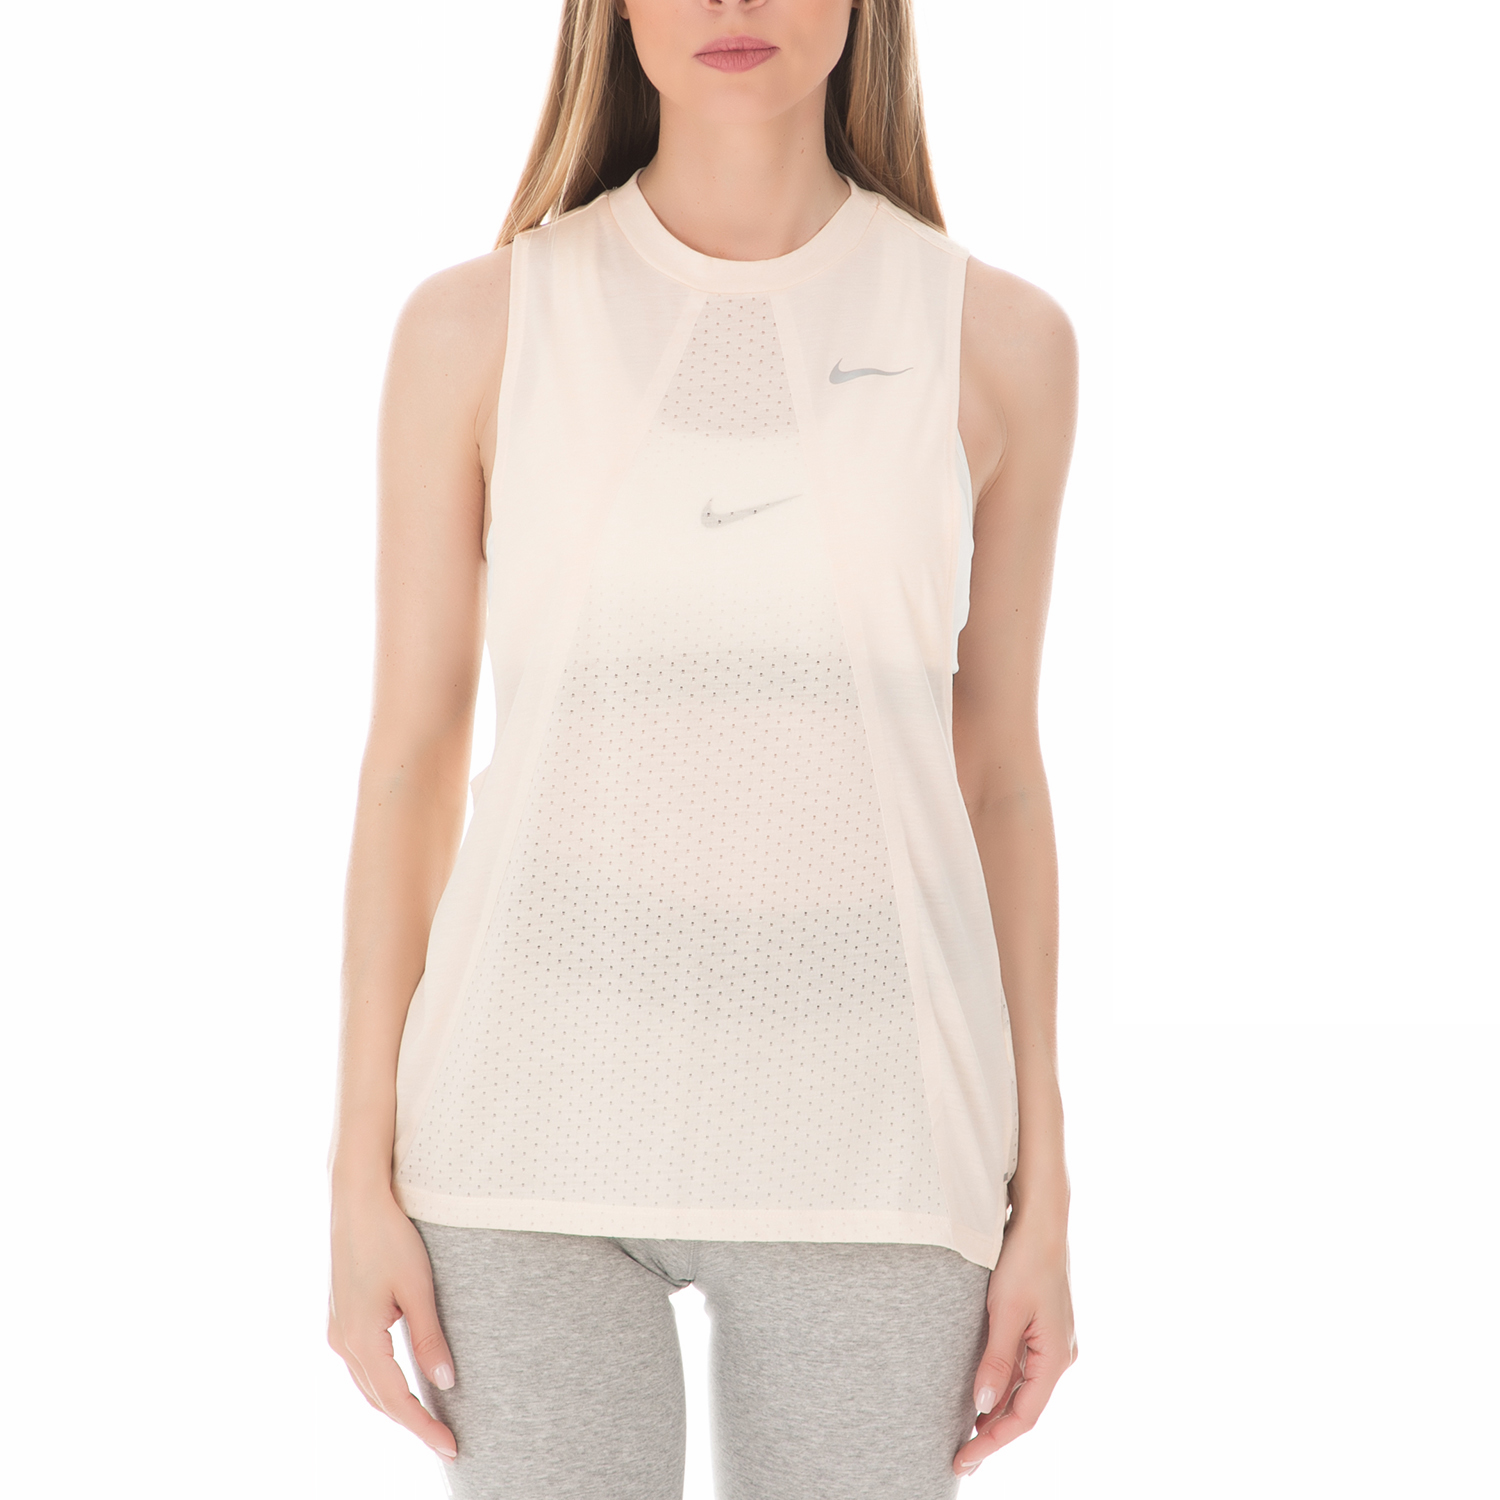 NIKE - Γυναικεία αμάνικη μπλούζα NIKE TAILWIND TANK COOL σομόν Γυναικεία/Ρούχα/Αθλητικά/T-shirt-Τοπ